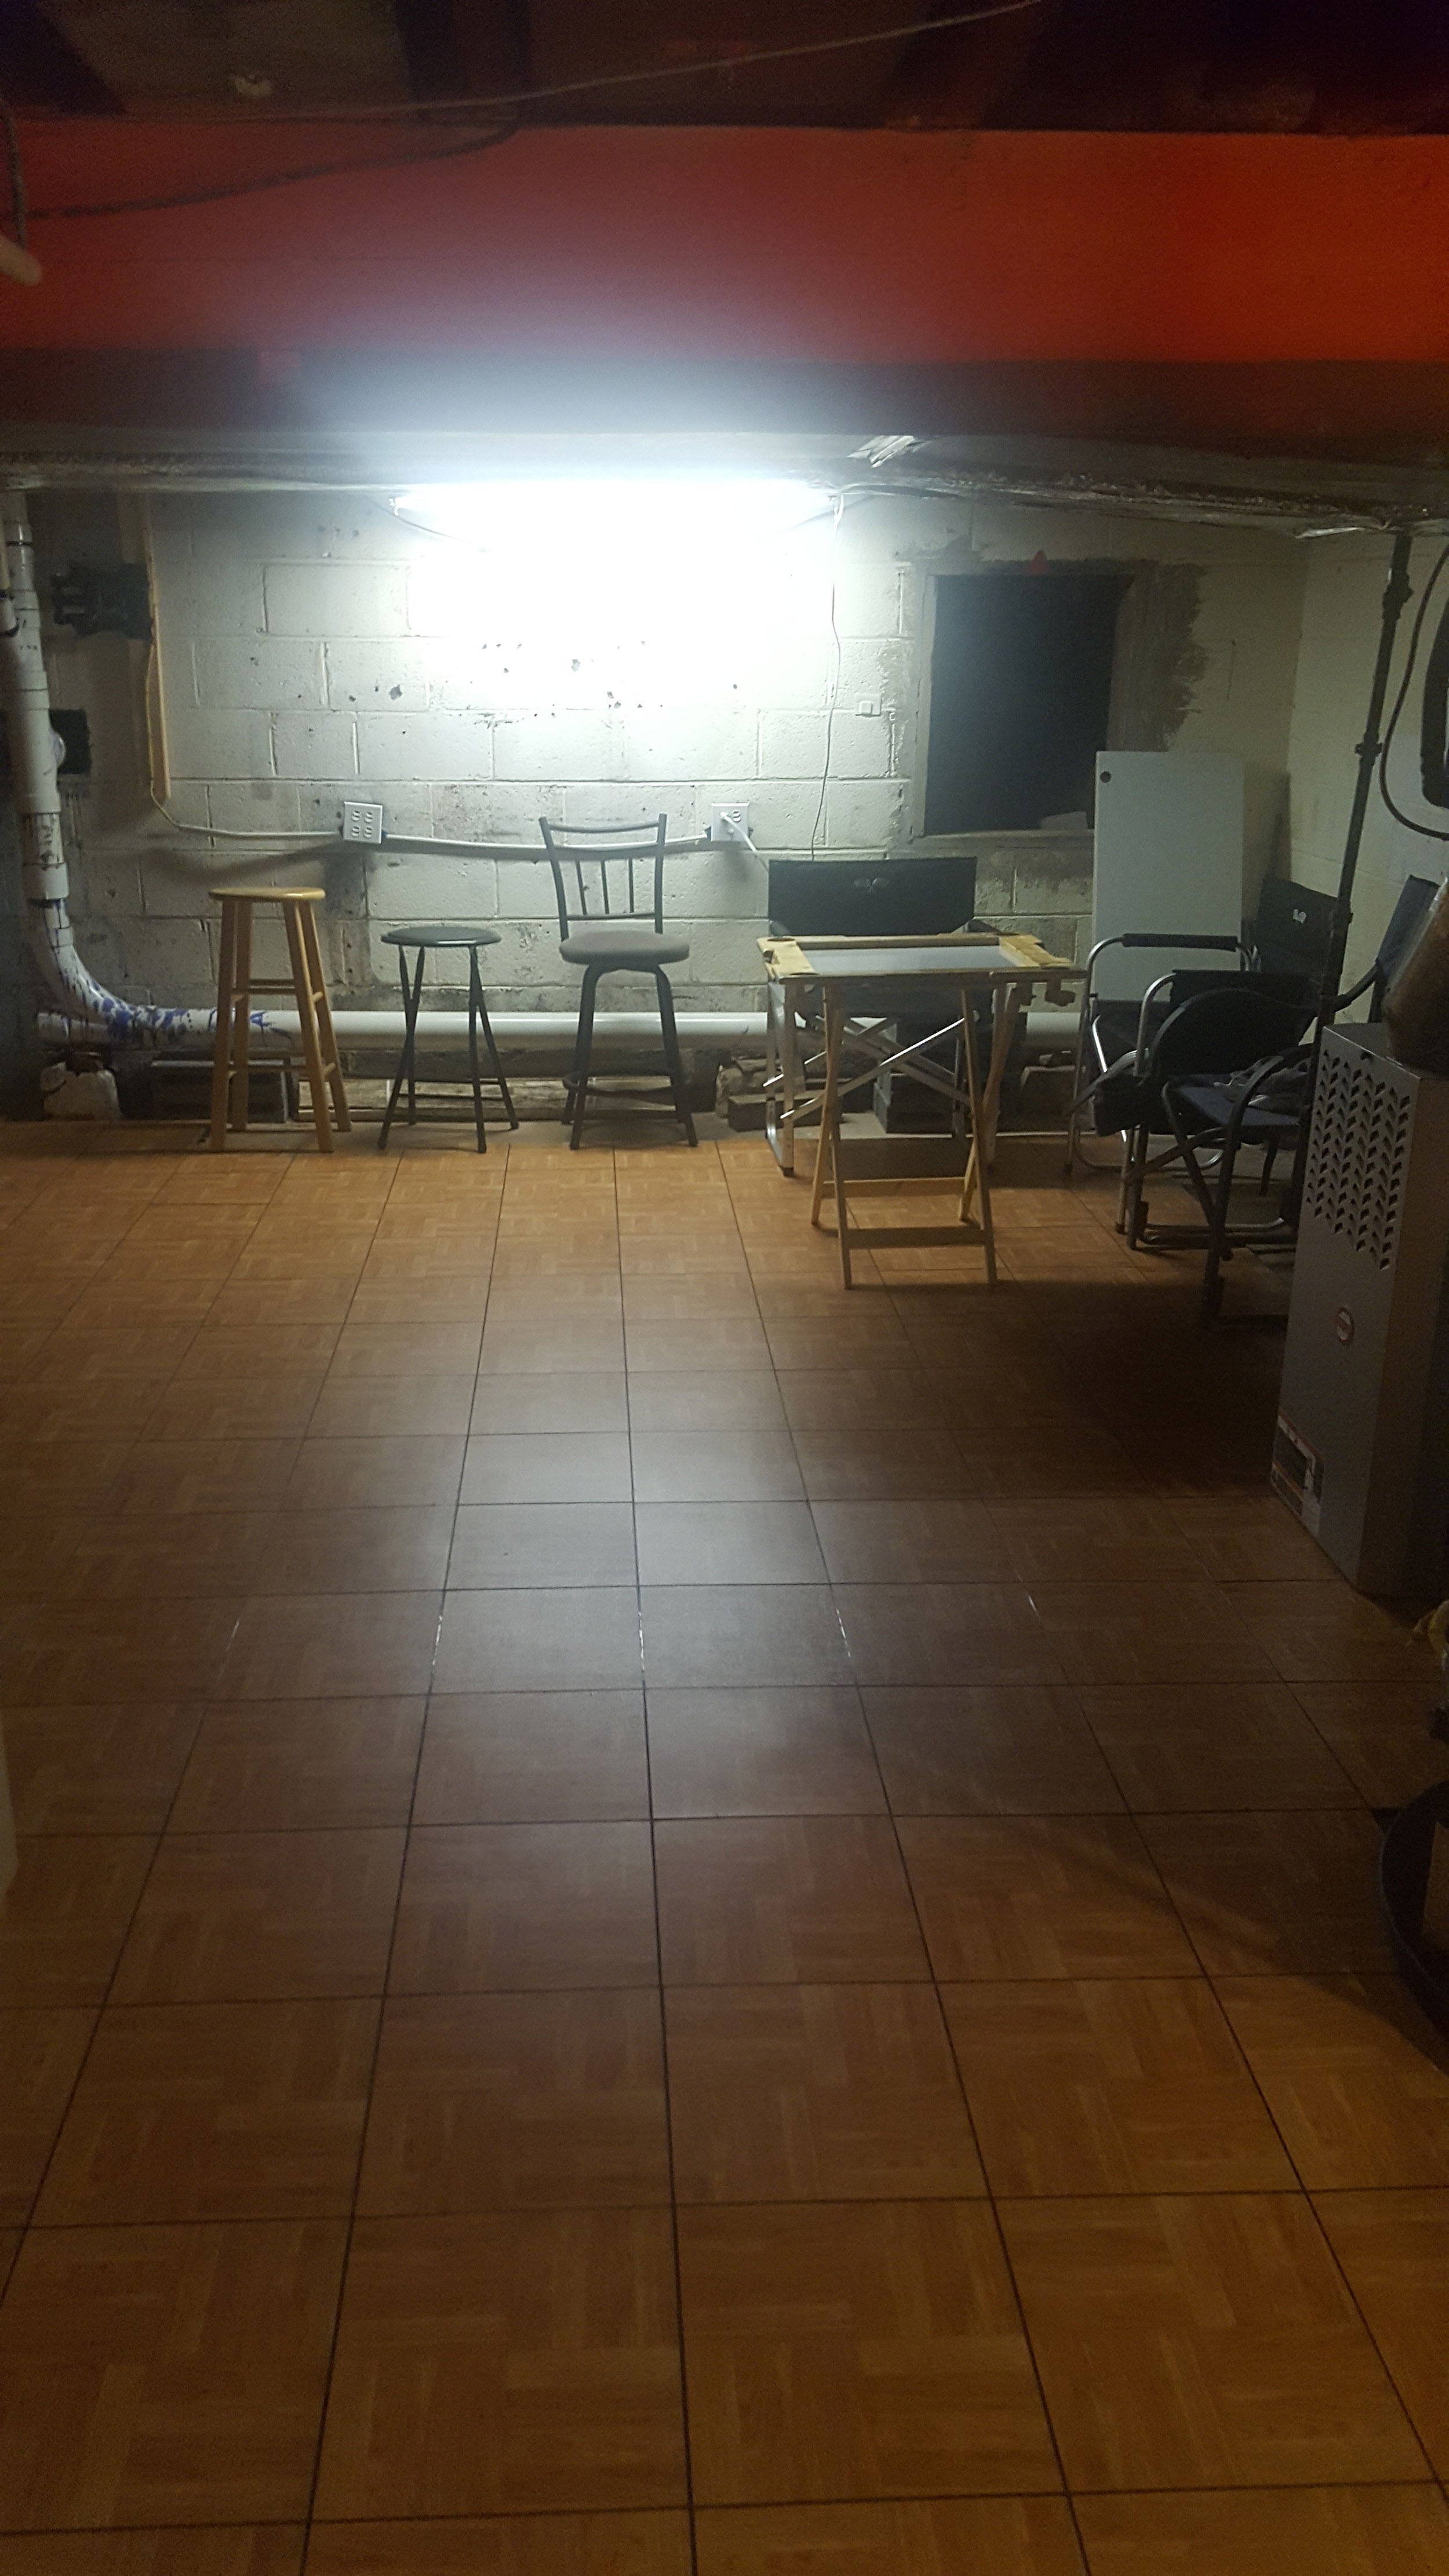 Basement Portable Floor Tile 5/8 Inch x 1x1 Ft. customer review photo 3